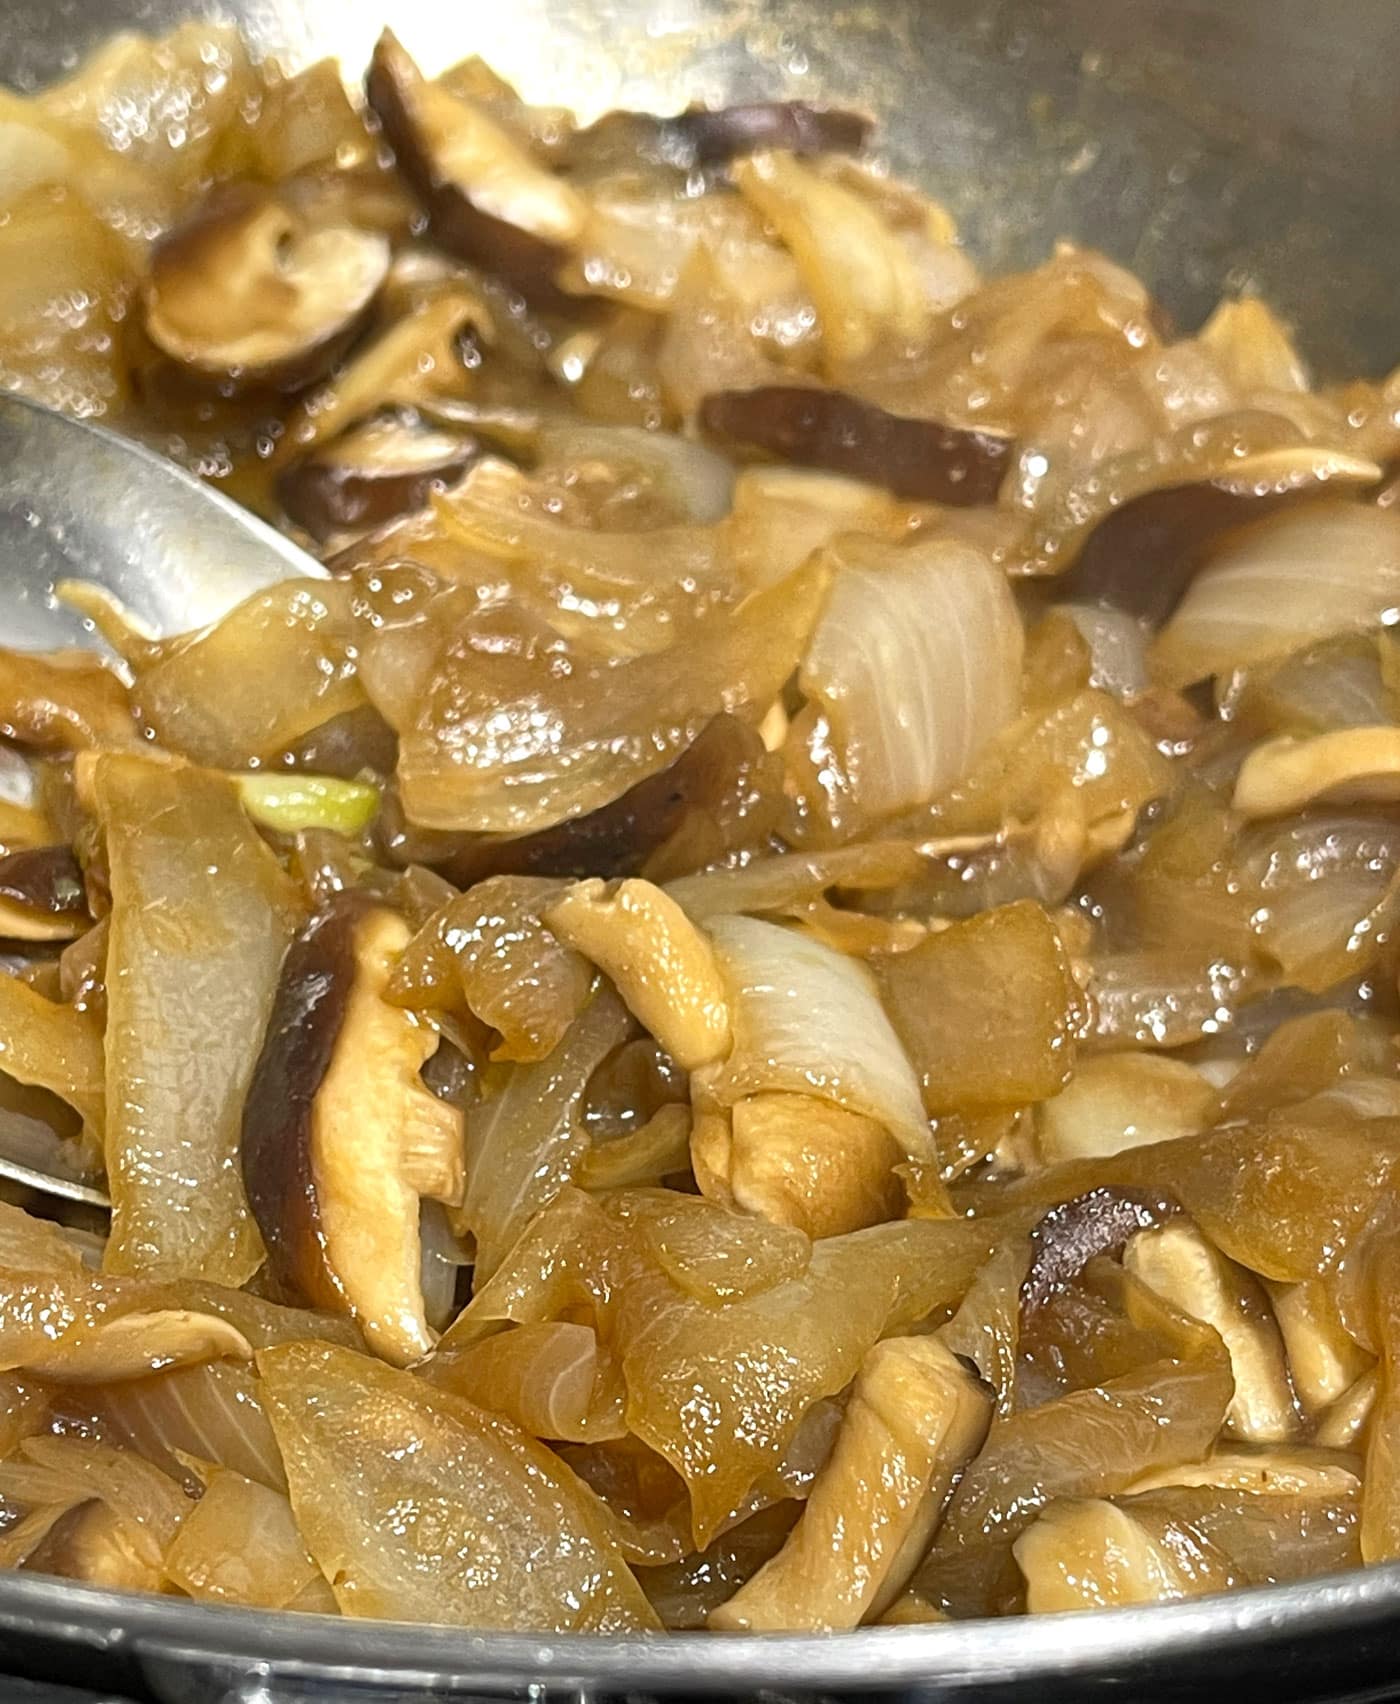 onions and mushrooms sauteed